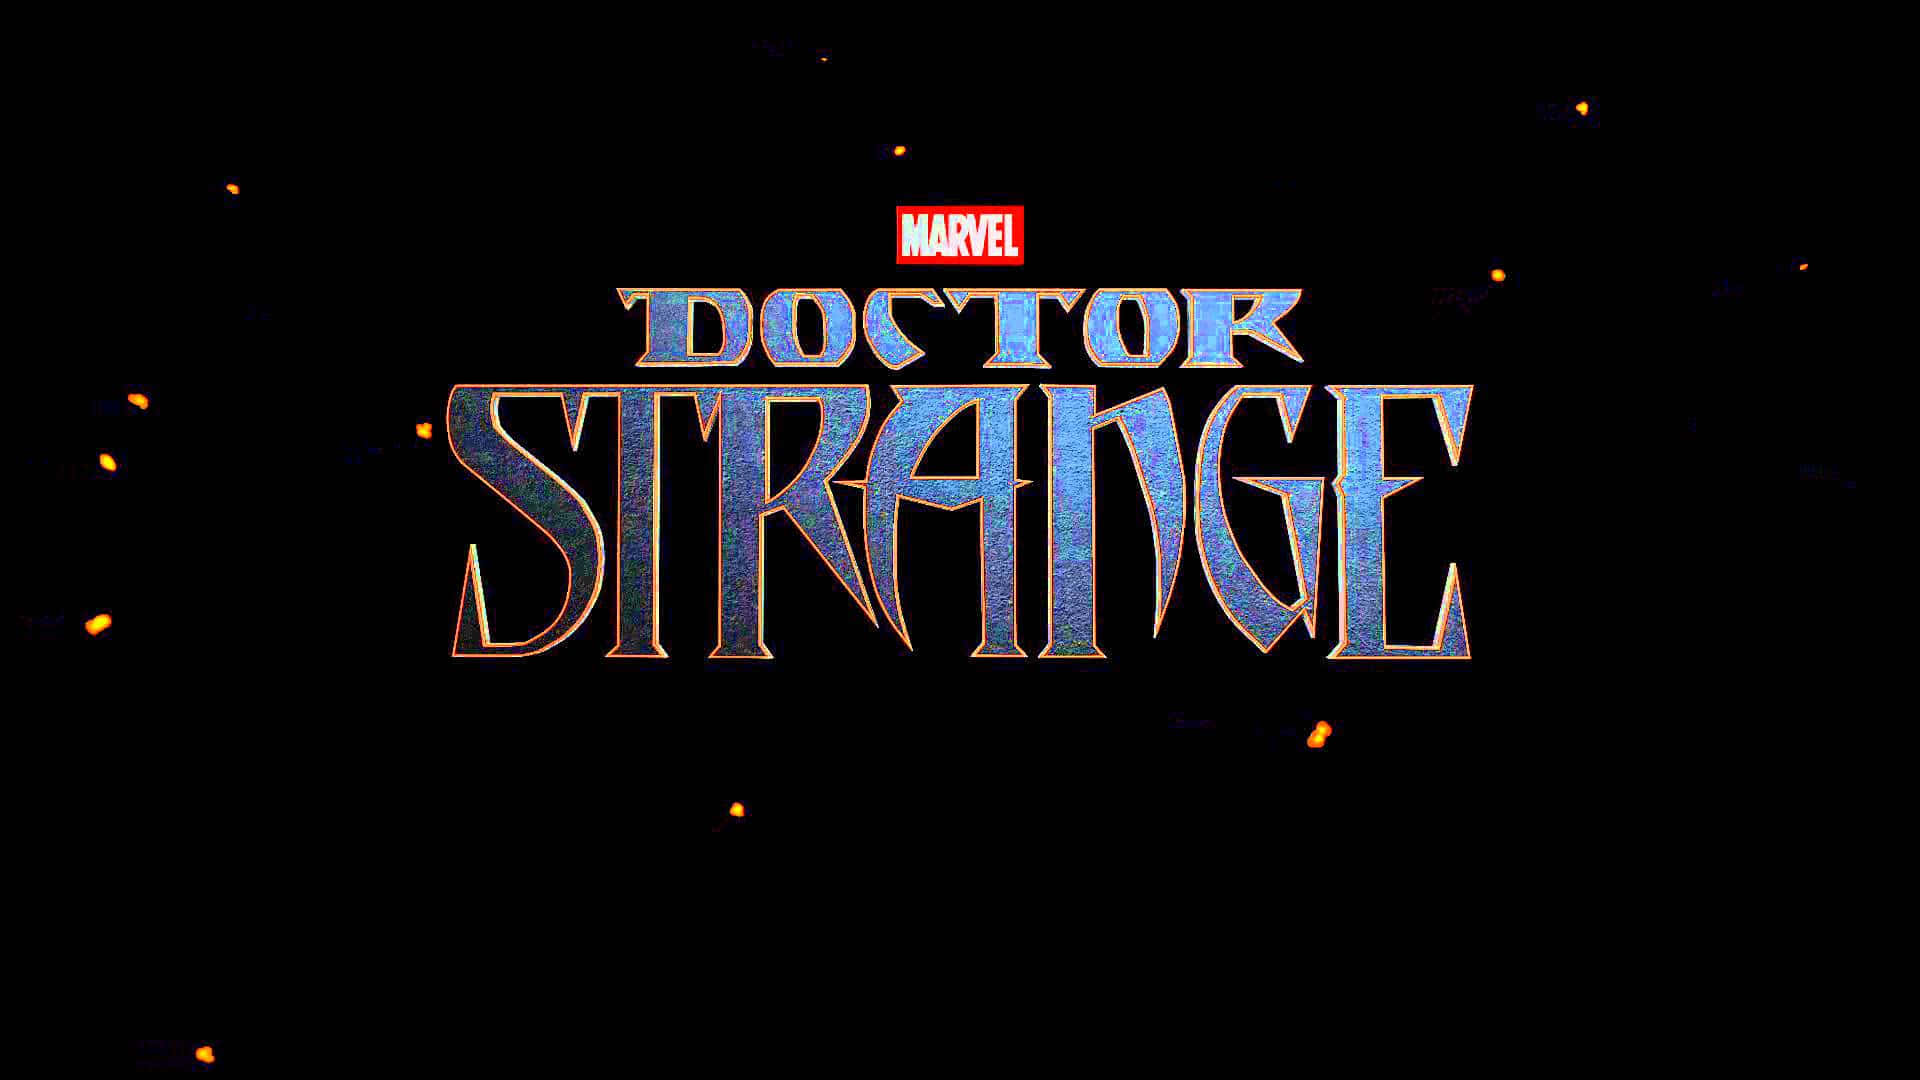 Fondos De Doctor Strange